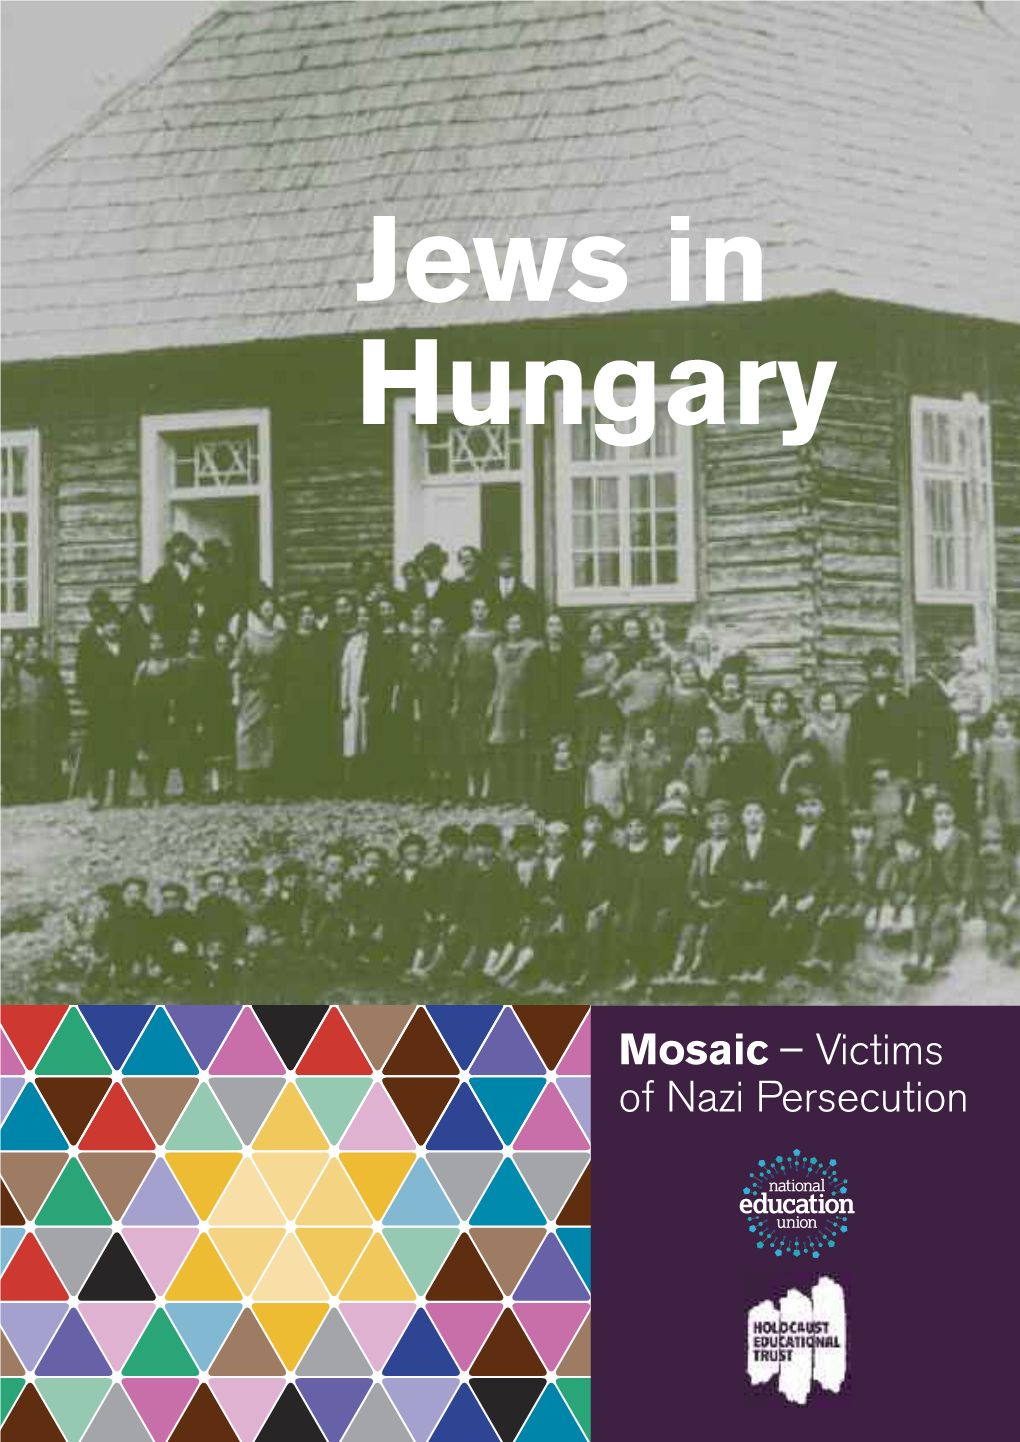 Mosaic – Victims of Nazi Persecution